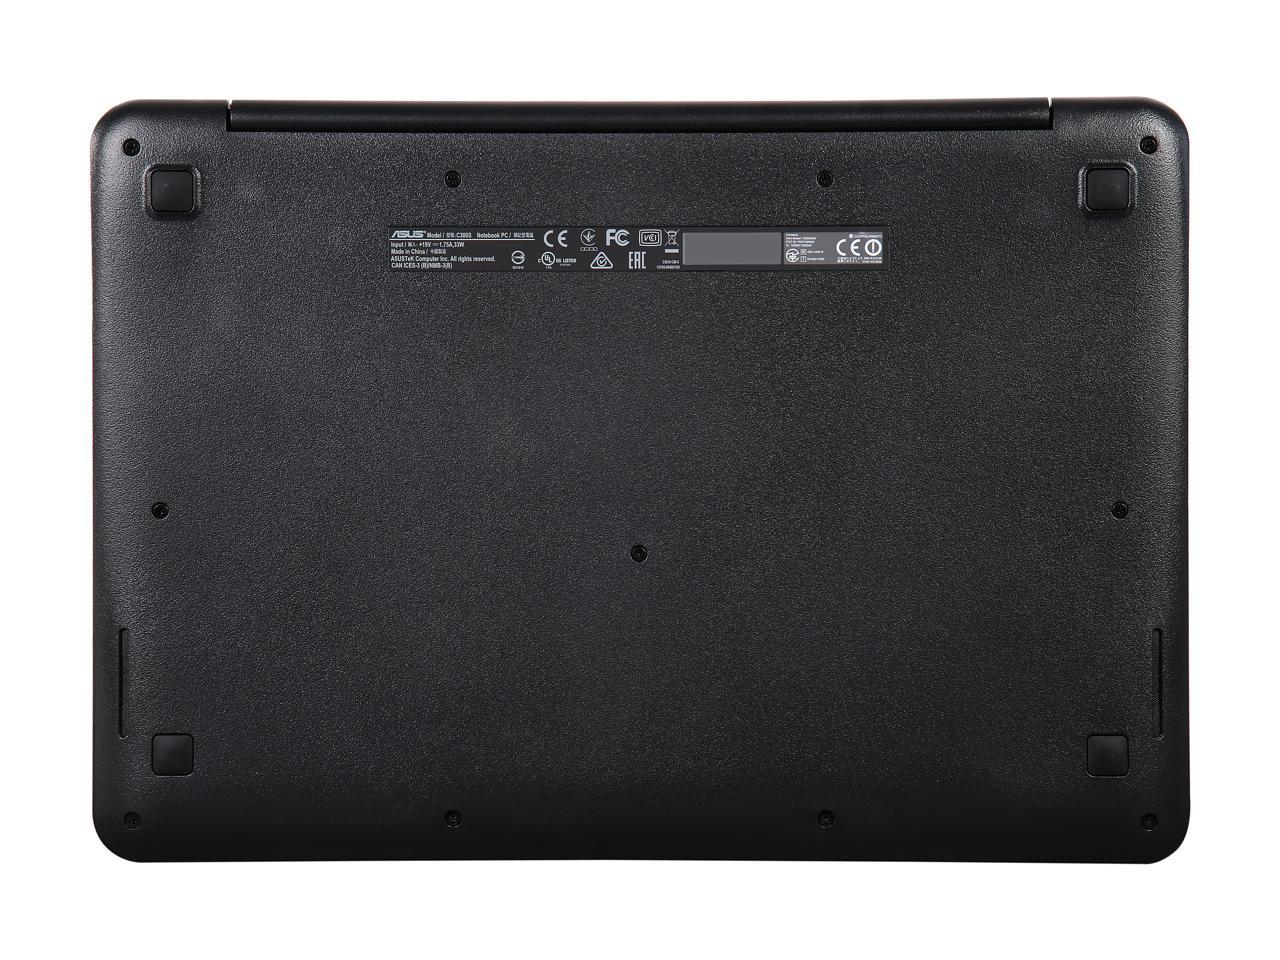 ASUS C300 Chromebook C300SA-DH02 Compact 13.3 Inch (Intel Celeron, 4 GB